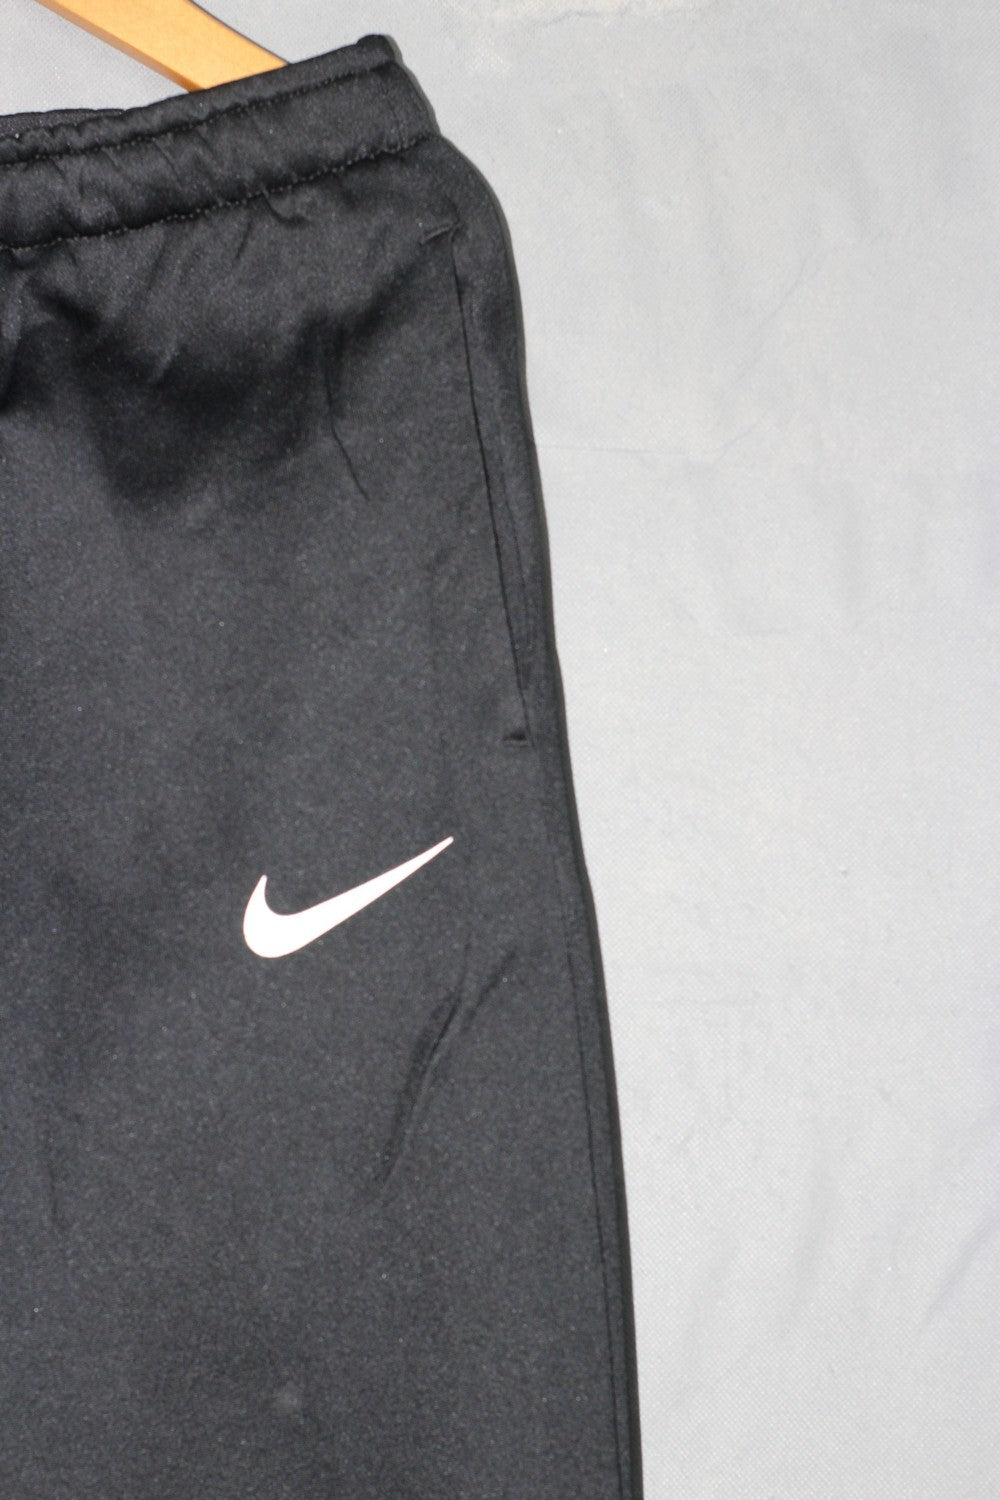 Nike Dri-Fit Branded Original Sports Winter Trouser For Men